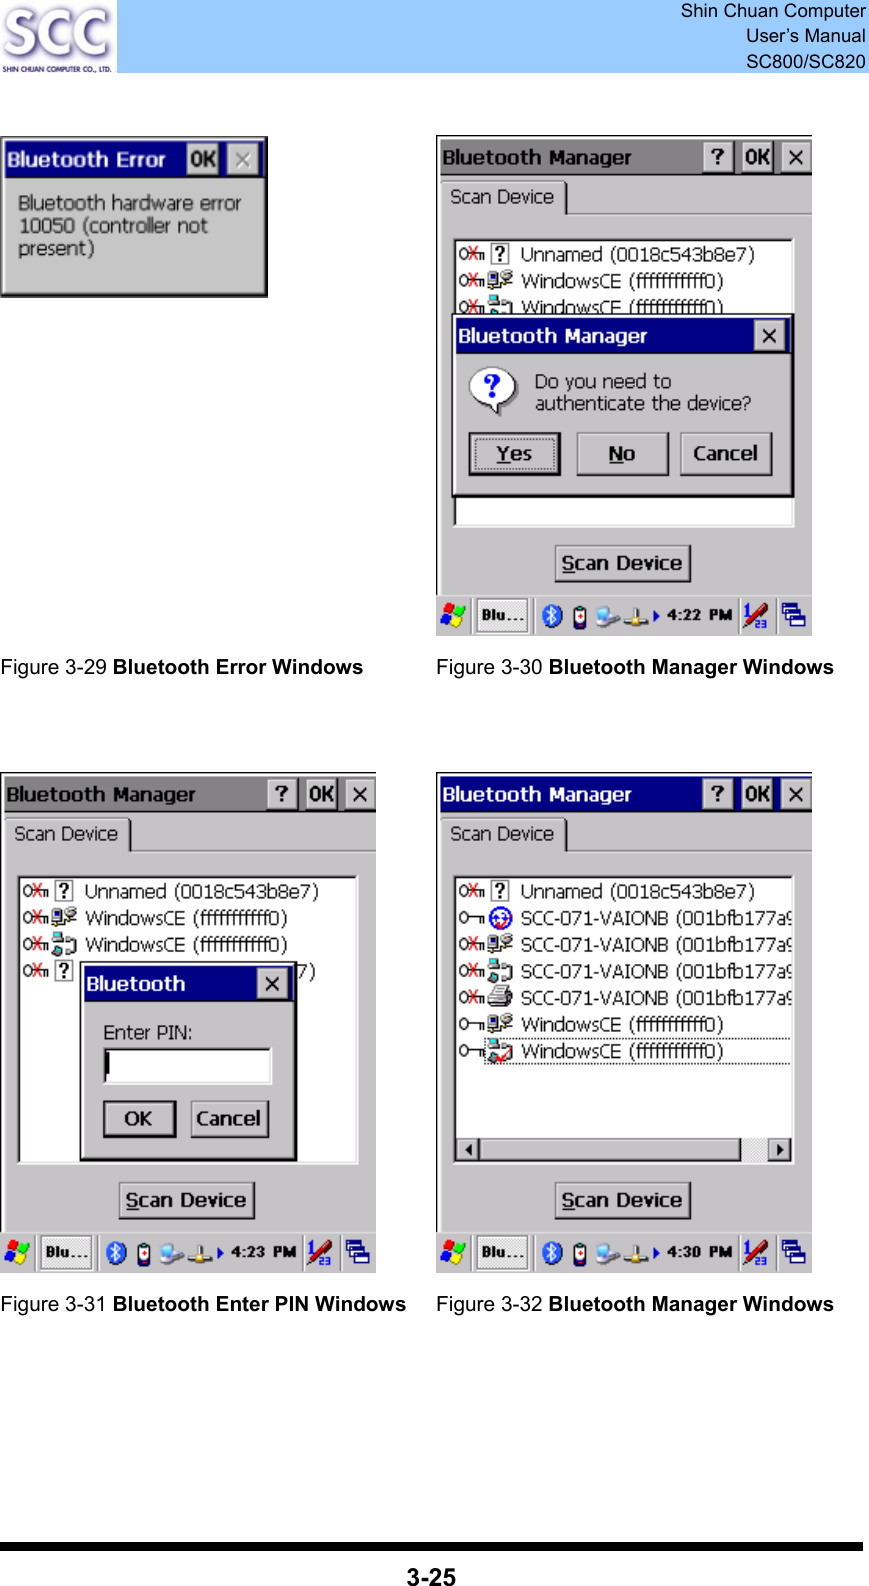  Shin Chuan Computer User’s Manual SC800/SC820  3-25    Figure 3-29 Bluetooth Error Windows Figure 3-30 Bluetooth Manager Windows      Figure 3-31 Bluetooth Enter PIN Windows     Figure 3-32 Bluetooth Manager Windows 